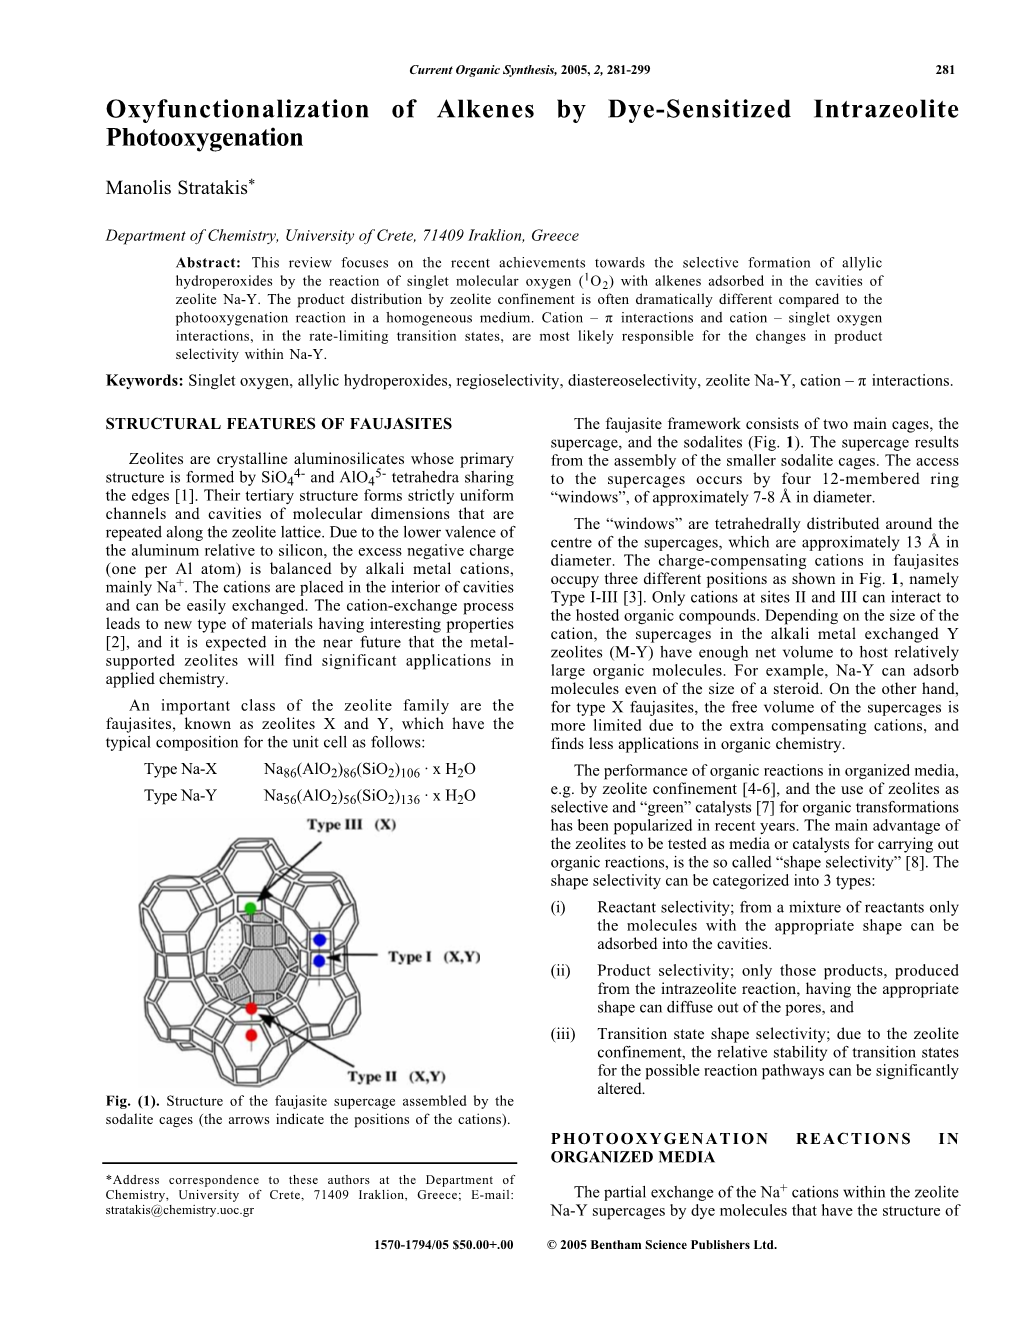 Oxyfunctionalization of Alkenes by Dye-Sensitized Intrazeolite Photooxygenation